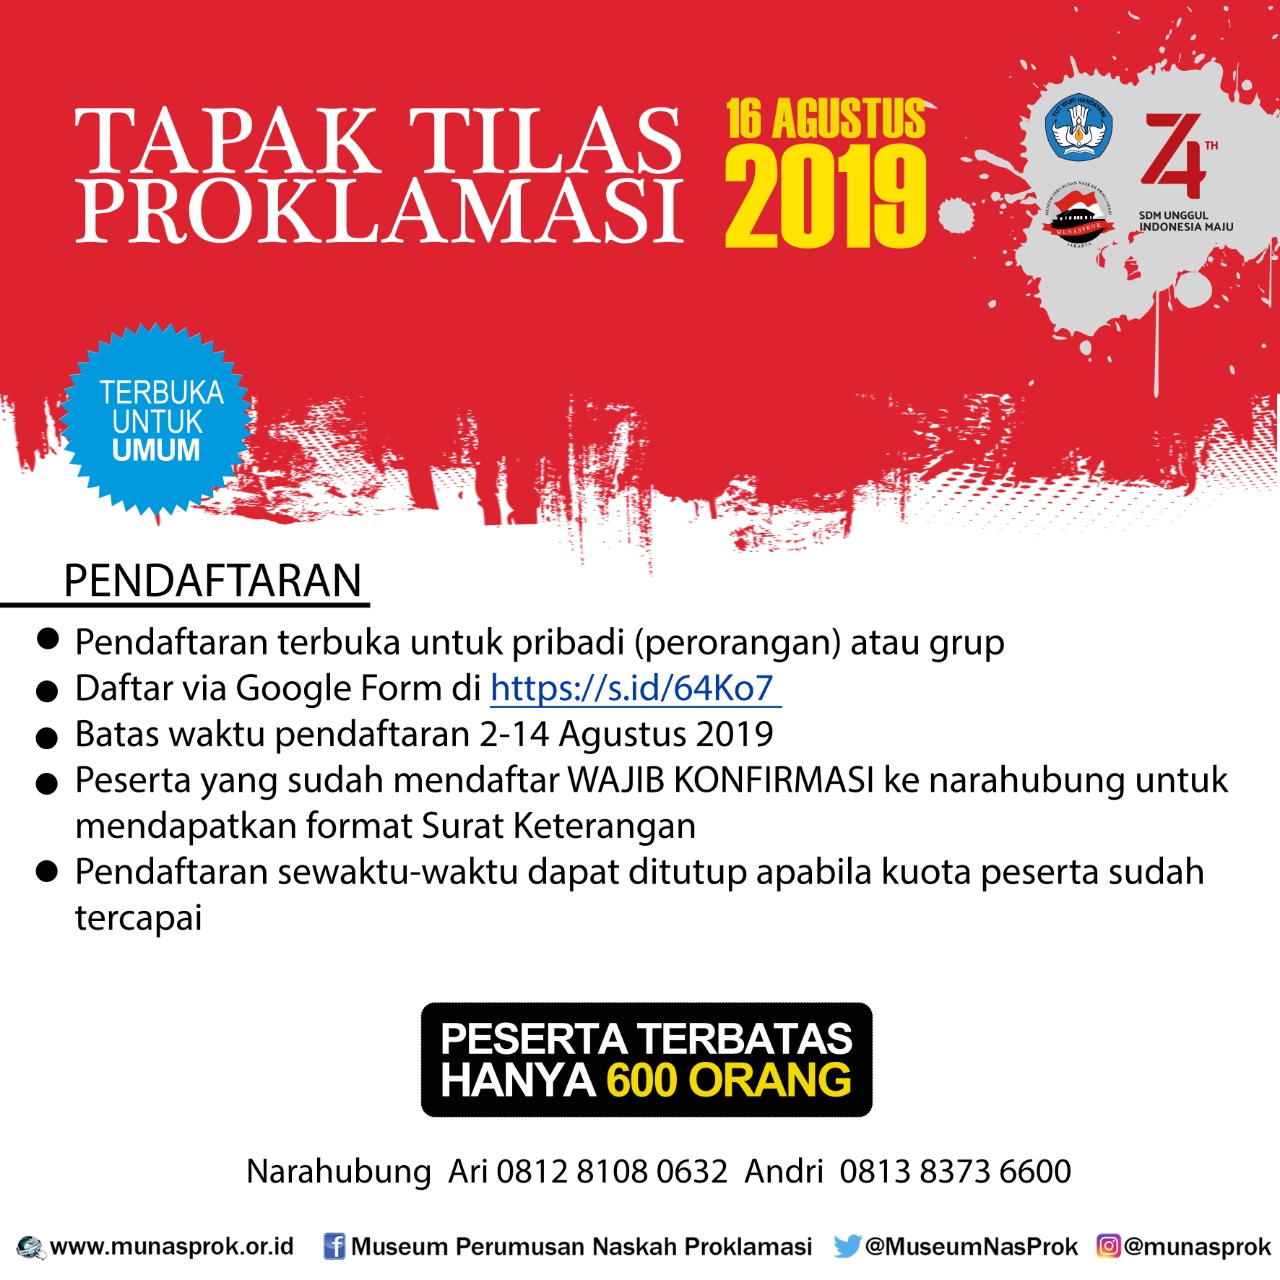 You are currently viewing TAPAK TILAS PROKLAMASI 2019